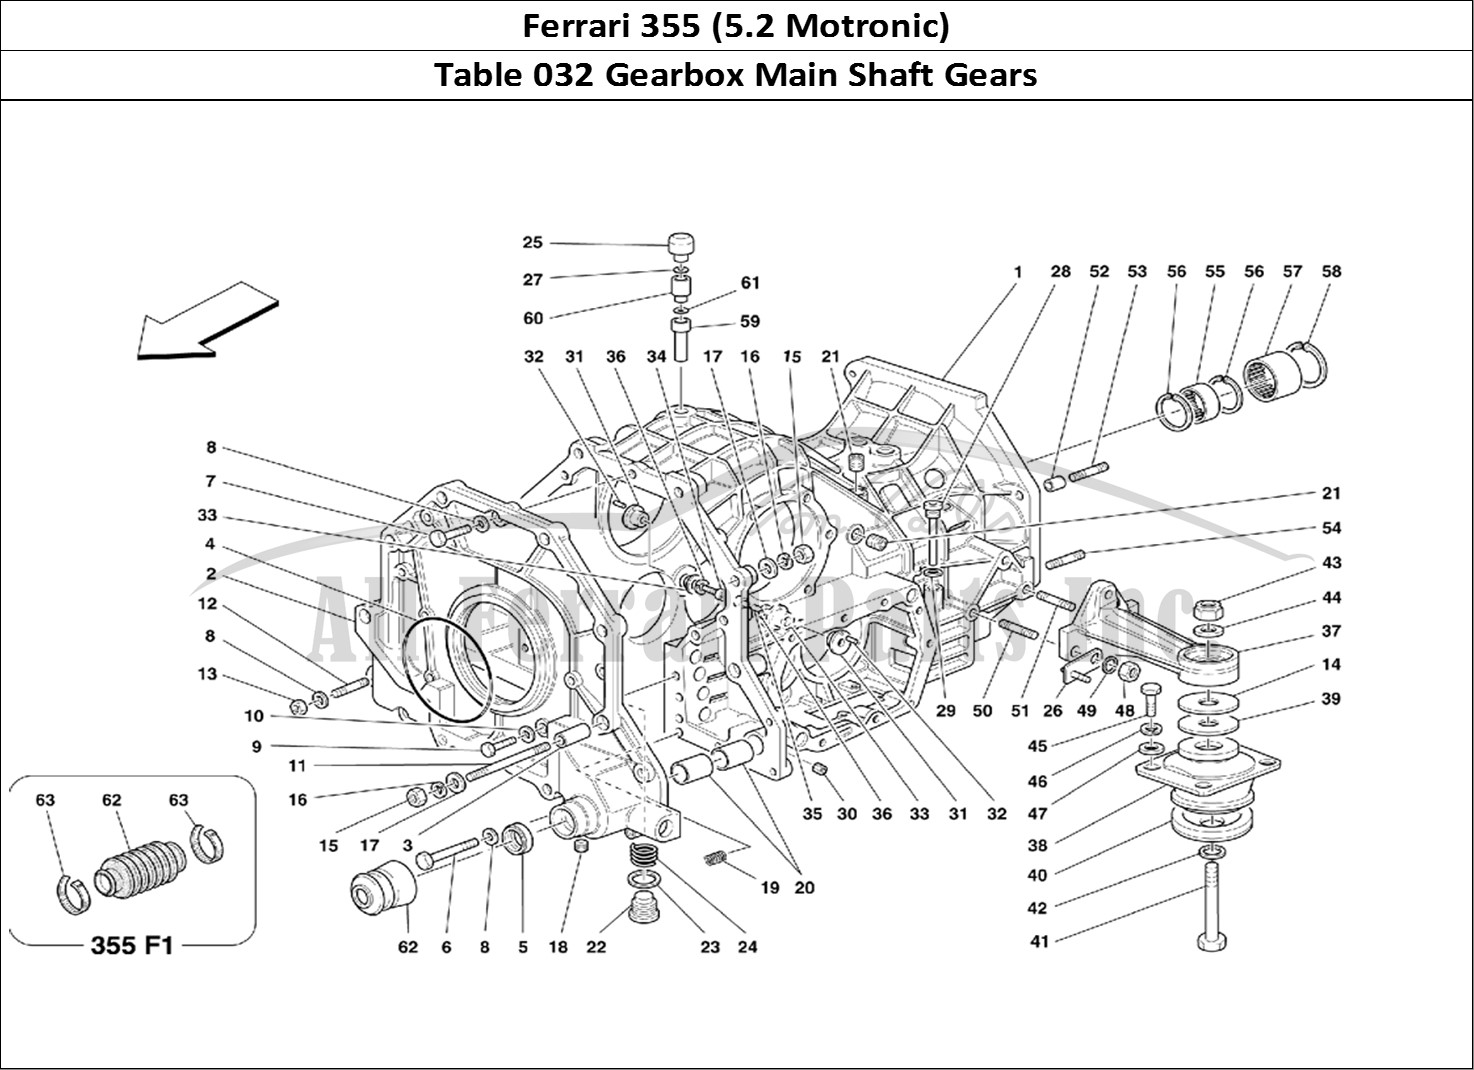 Ferrari Parts Ferrari 355 (5.2 Motronic) Page 032 Main Shaft Gears